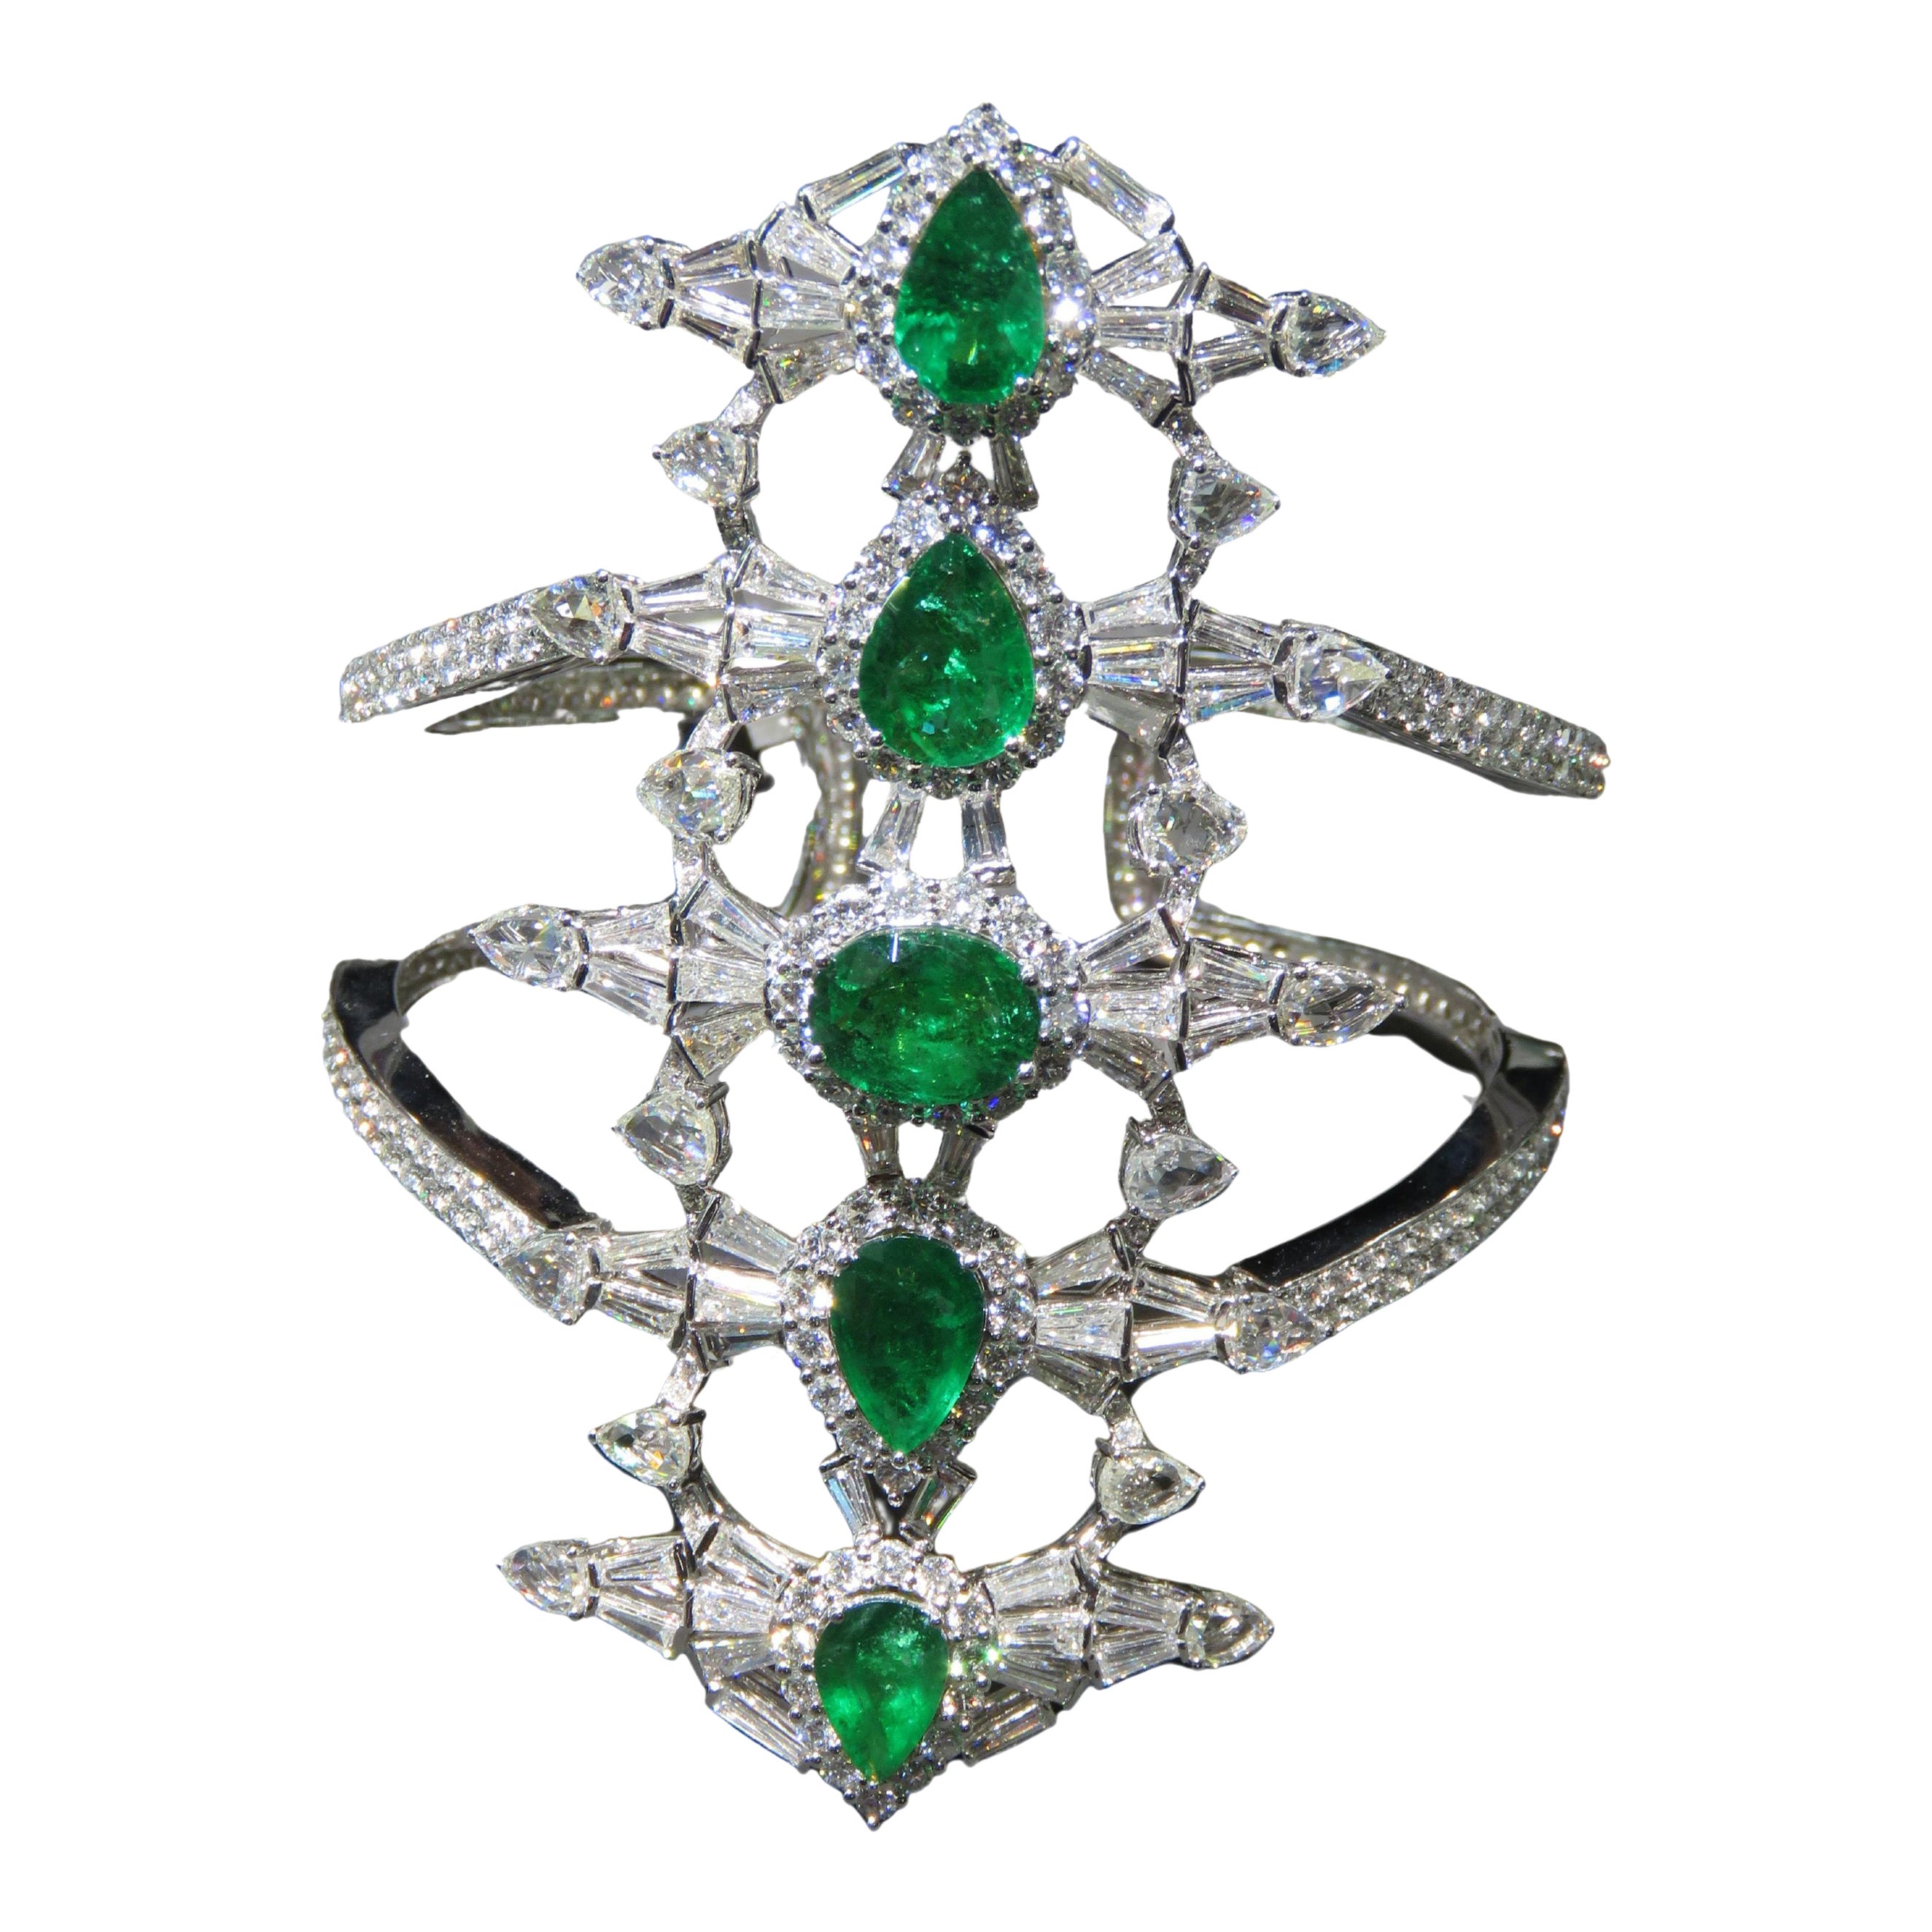 NEU $124, 900 18KT Gold Seltenes wichtiges Fancy 25CT Smaragd-Diamant-Armband, Unikat im Angebot